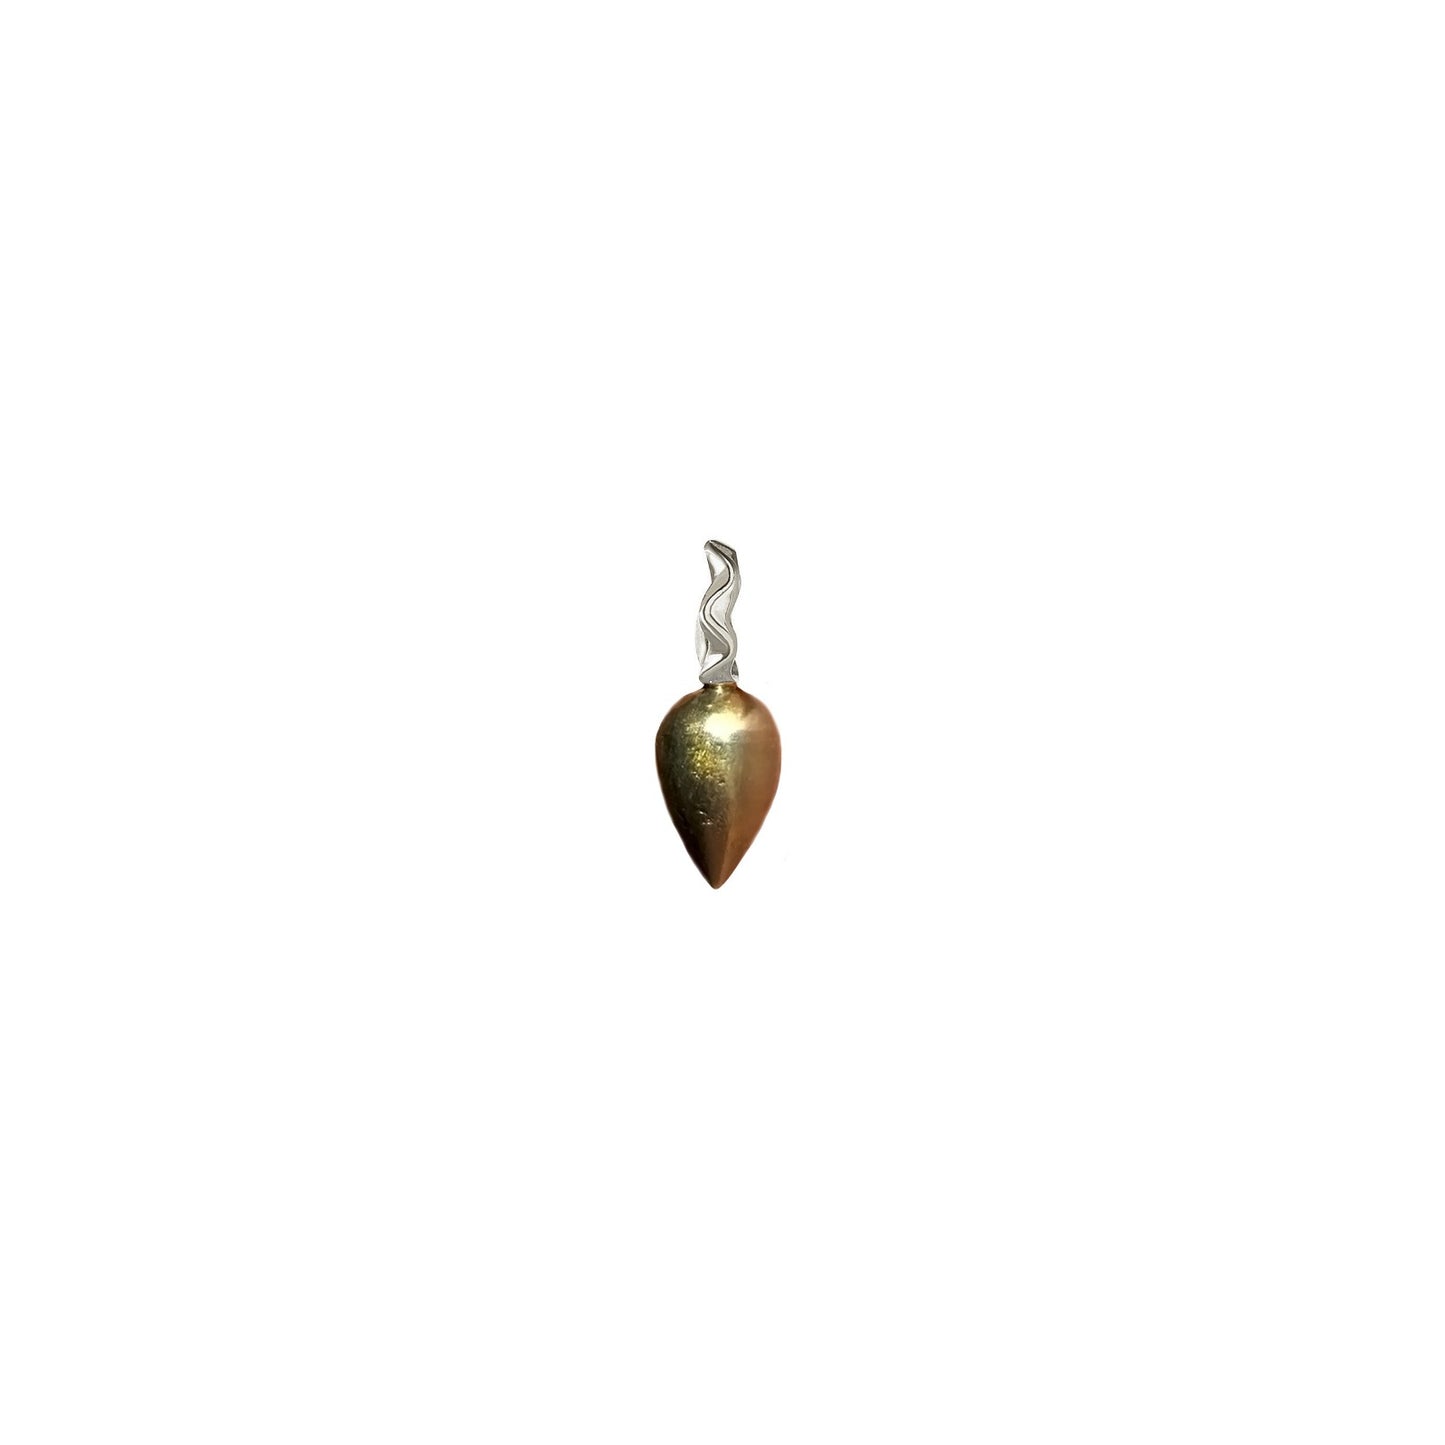 Pyrite acorn drop charm with 14k white gold bail